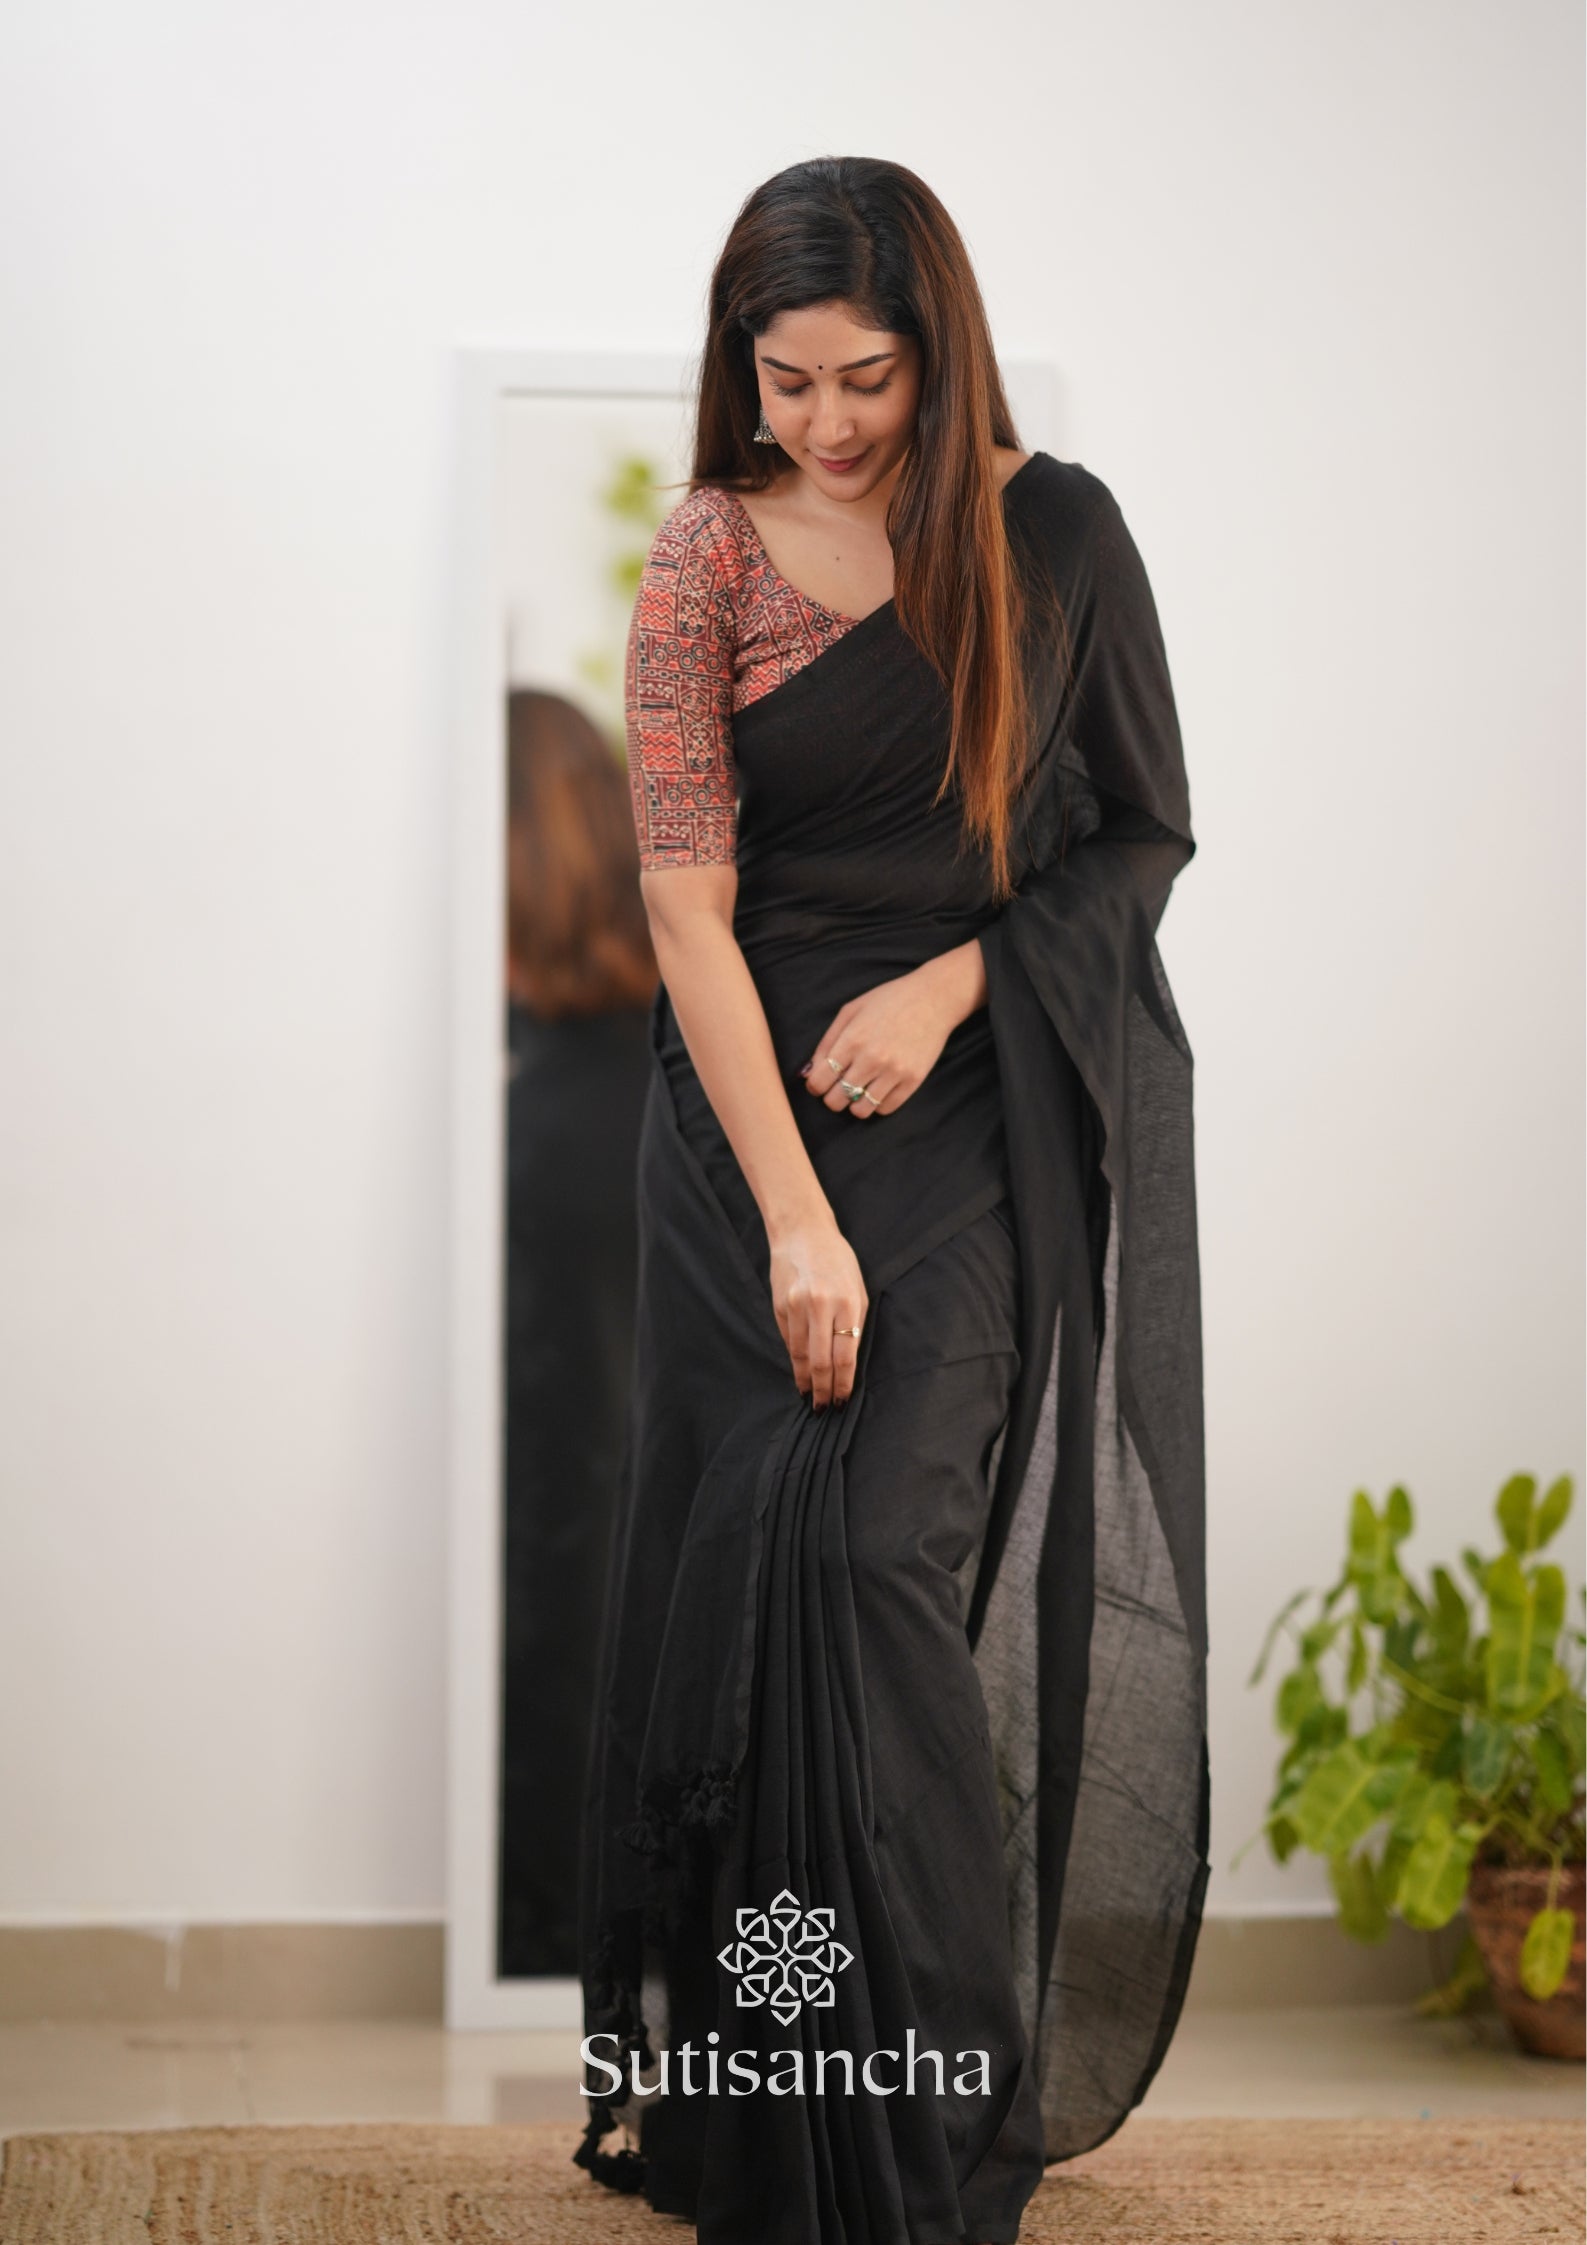 Sutisancha Black Handloom Cotton Saree With Designer Blouse